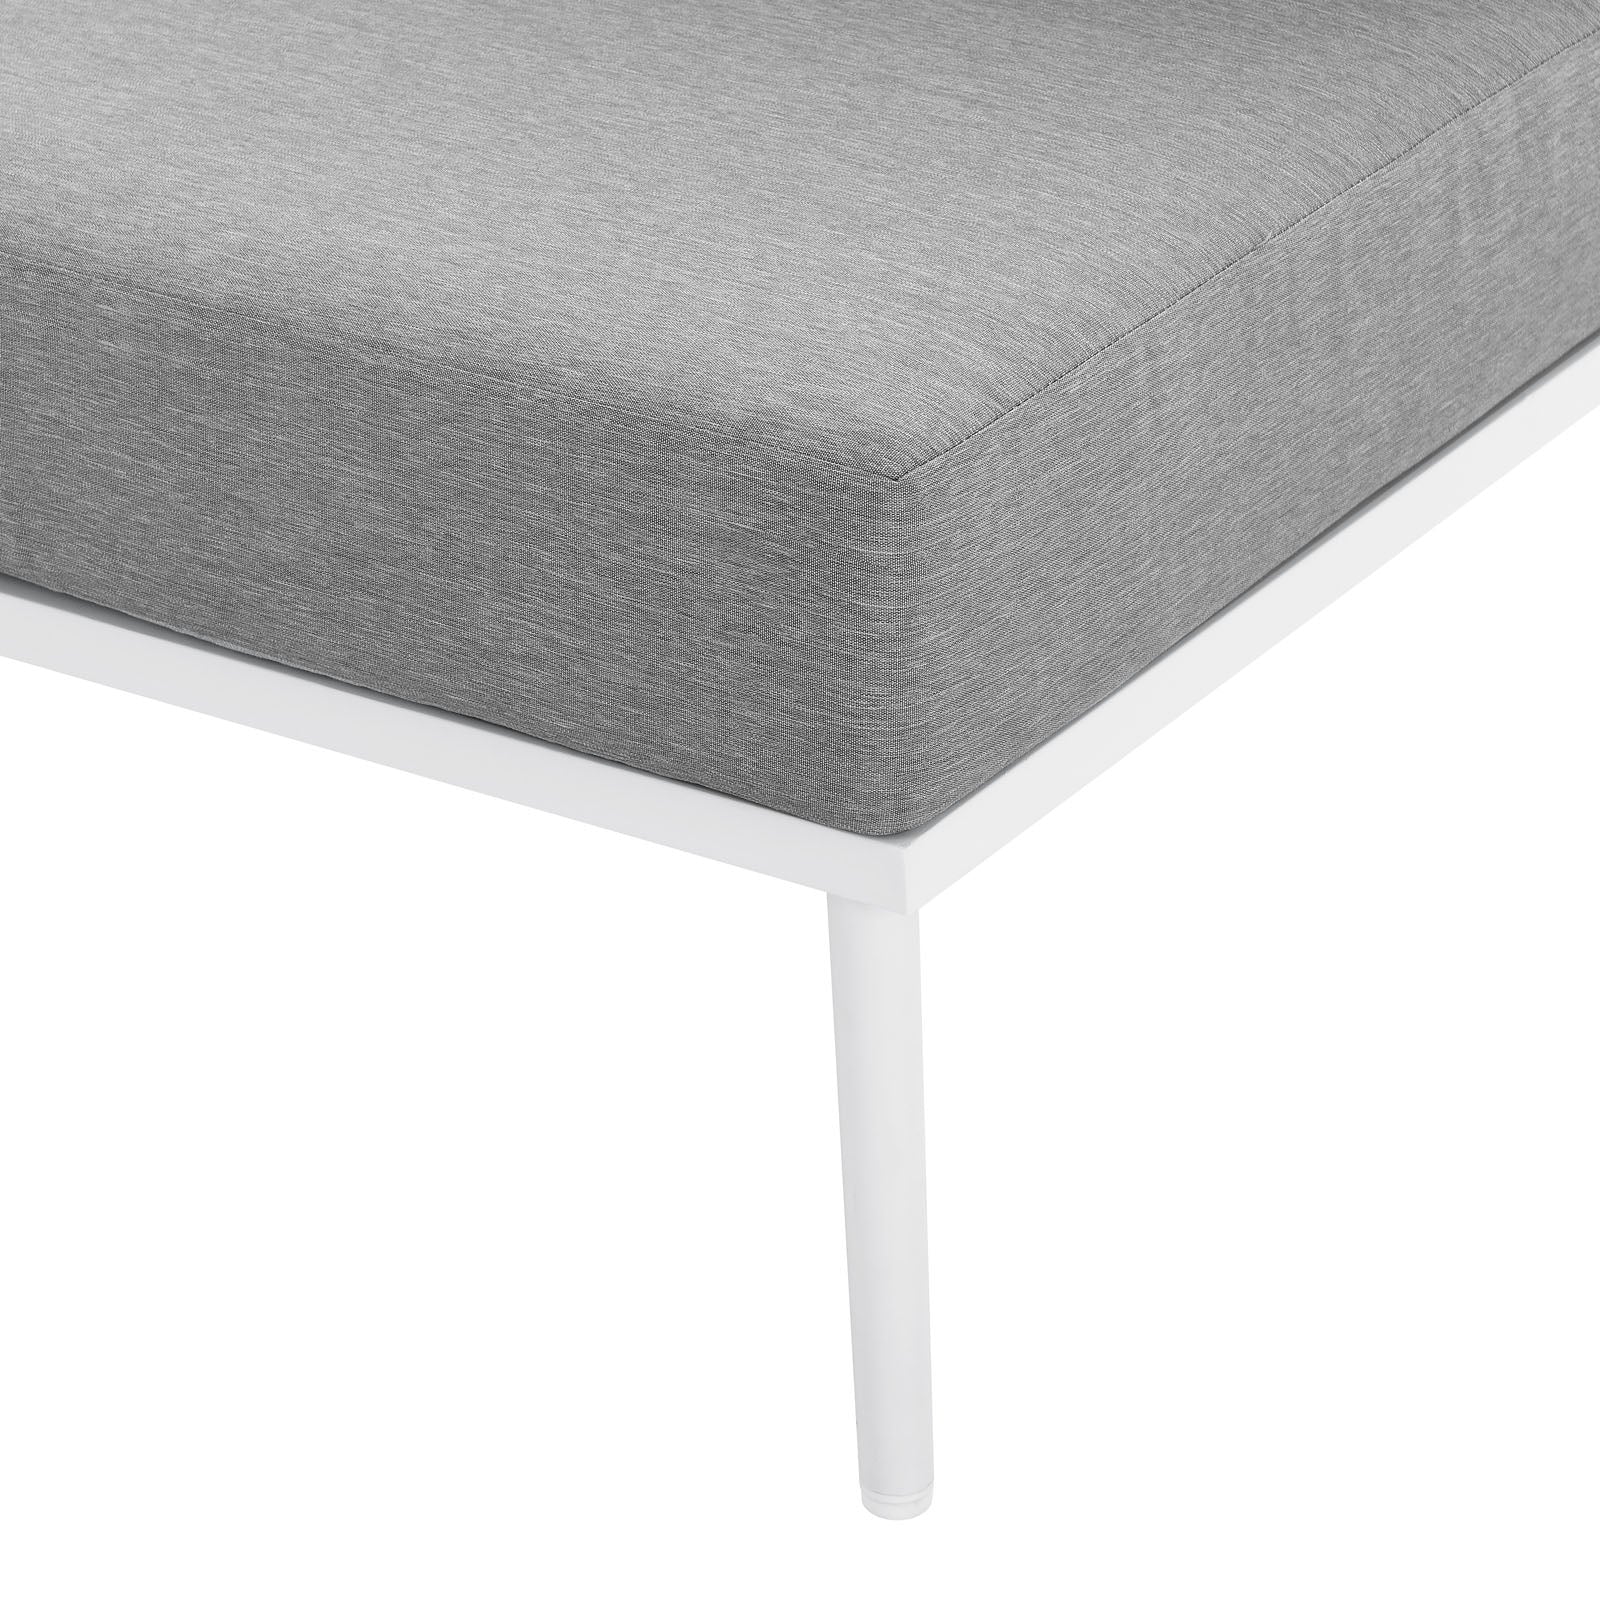 Modway - Stance Outdoor Patio Aluminum Armless Chair - EEI-5568